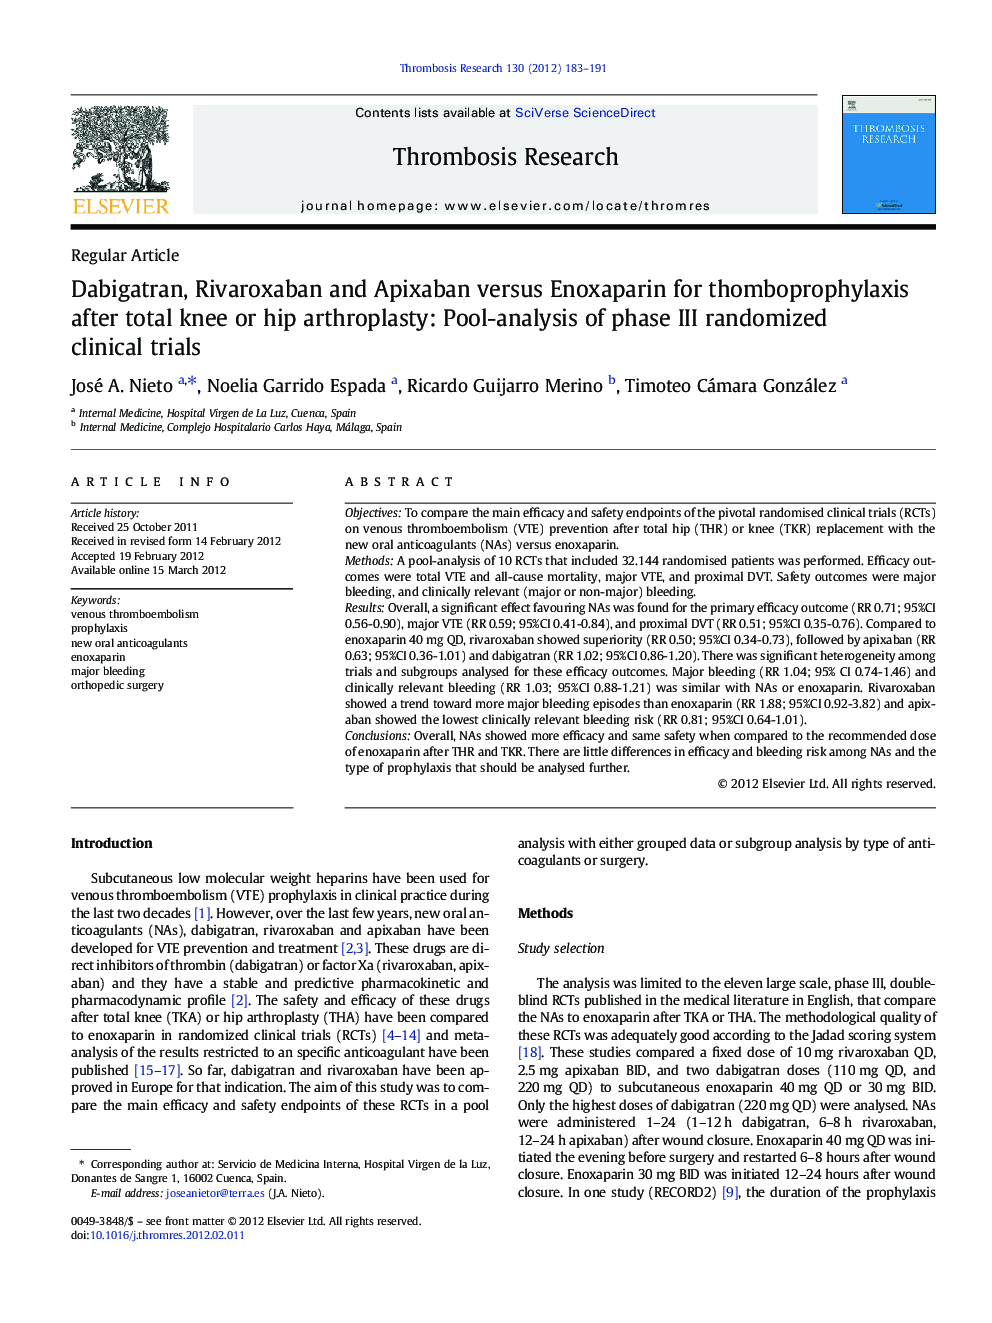 Dabigatran, Rivaroxaban and Apixaban versus Enoxaparin for thomboprophylaxis after total knee or hip arthroplasty: Pool-analysis of phase III randomized clinical trials